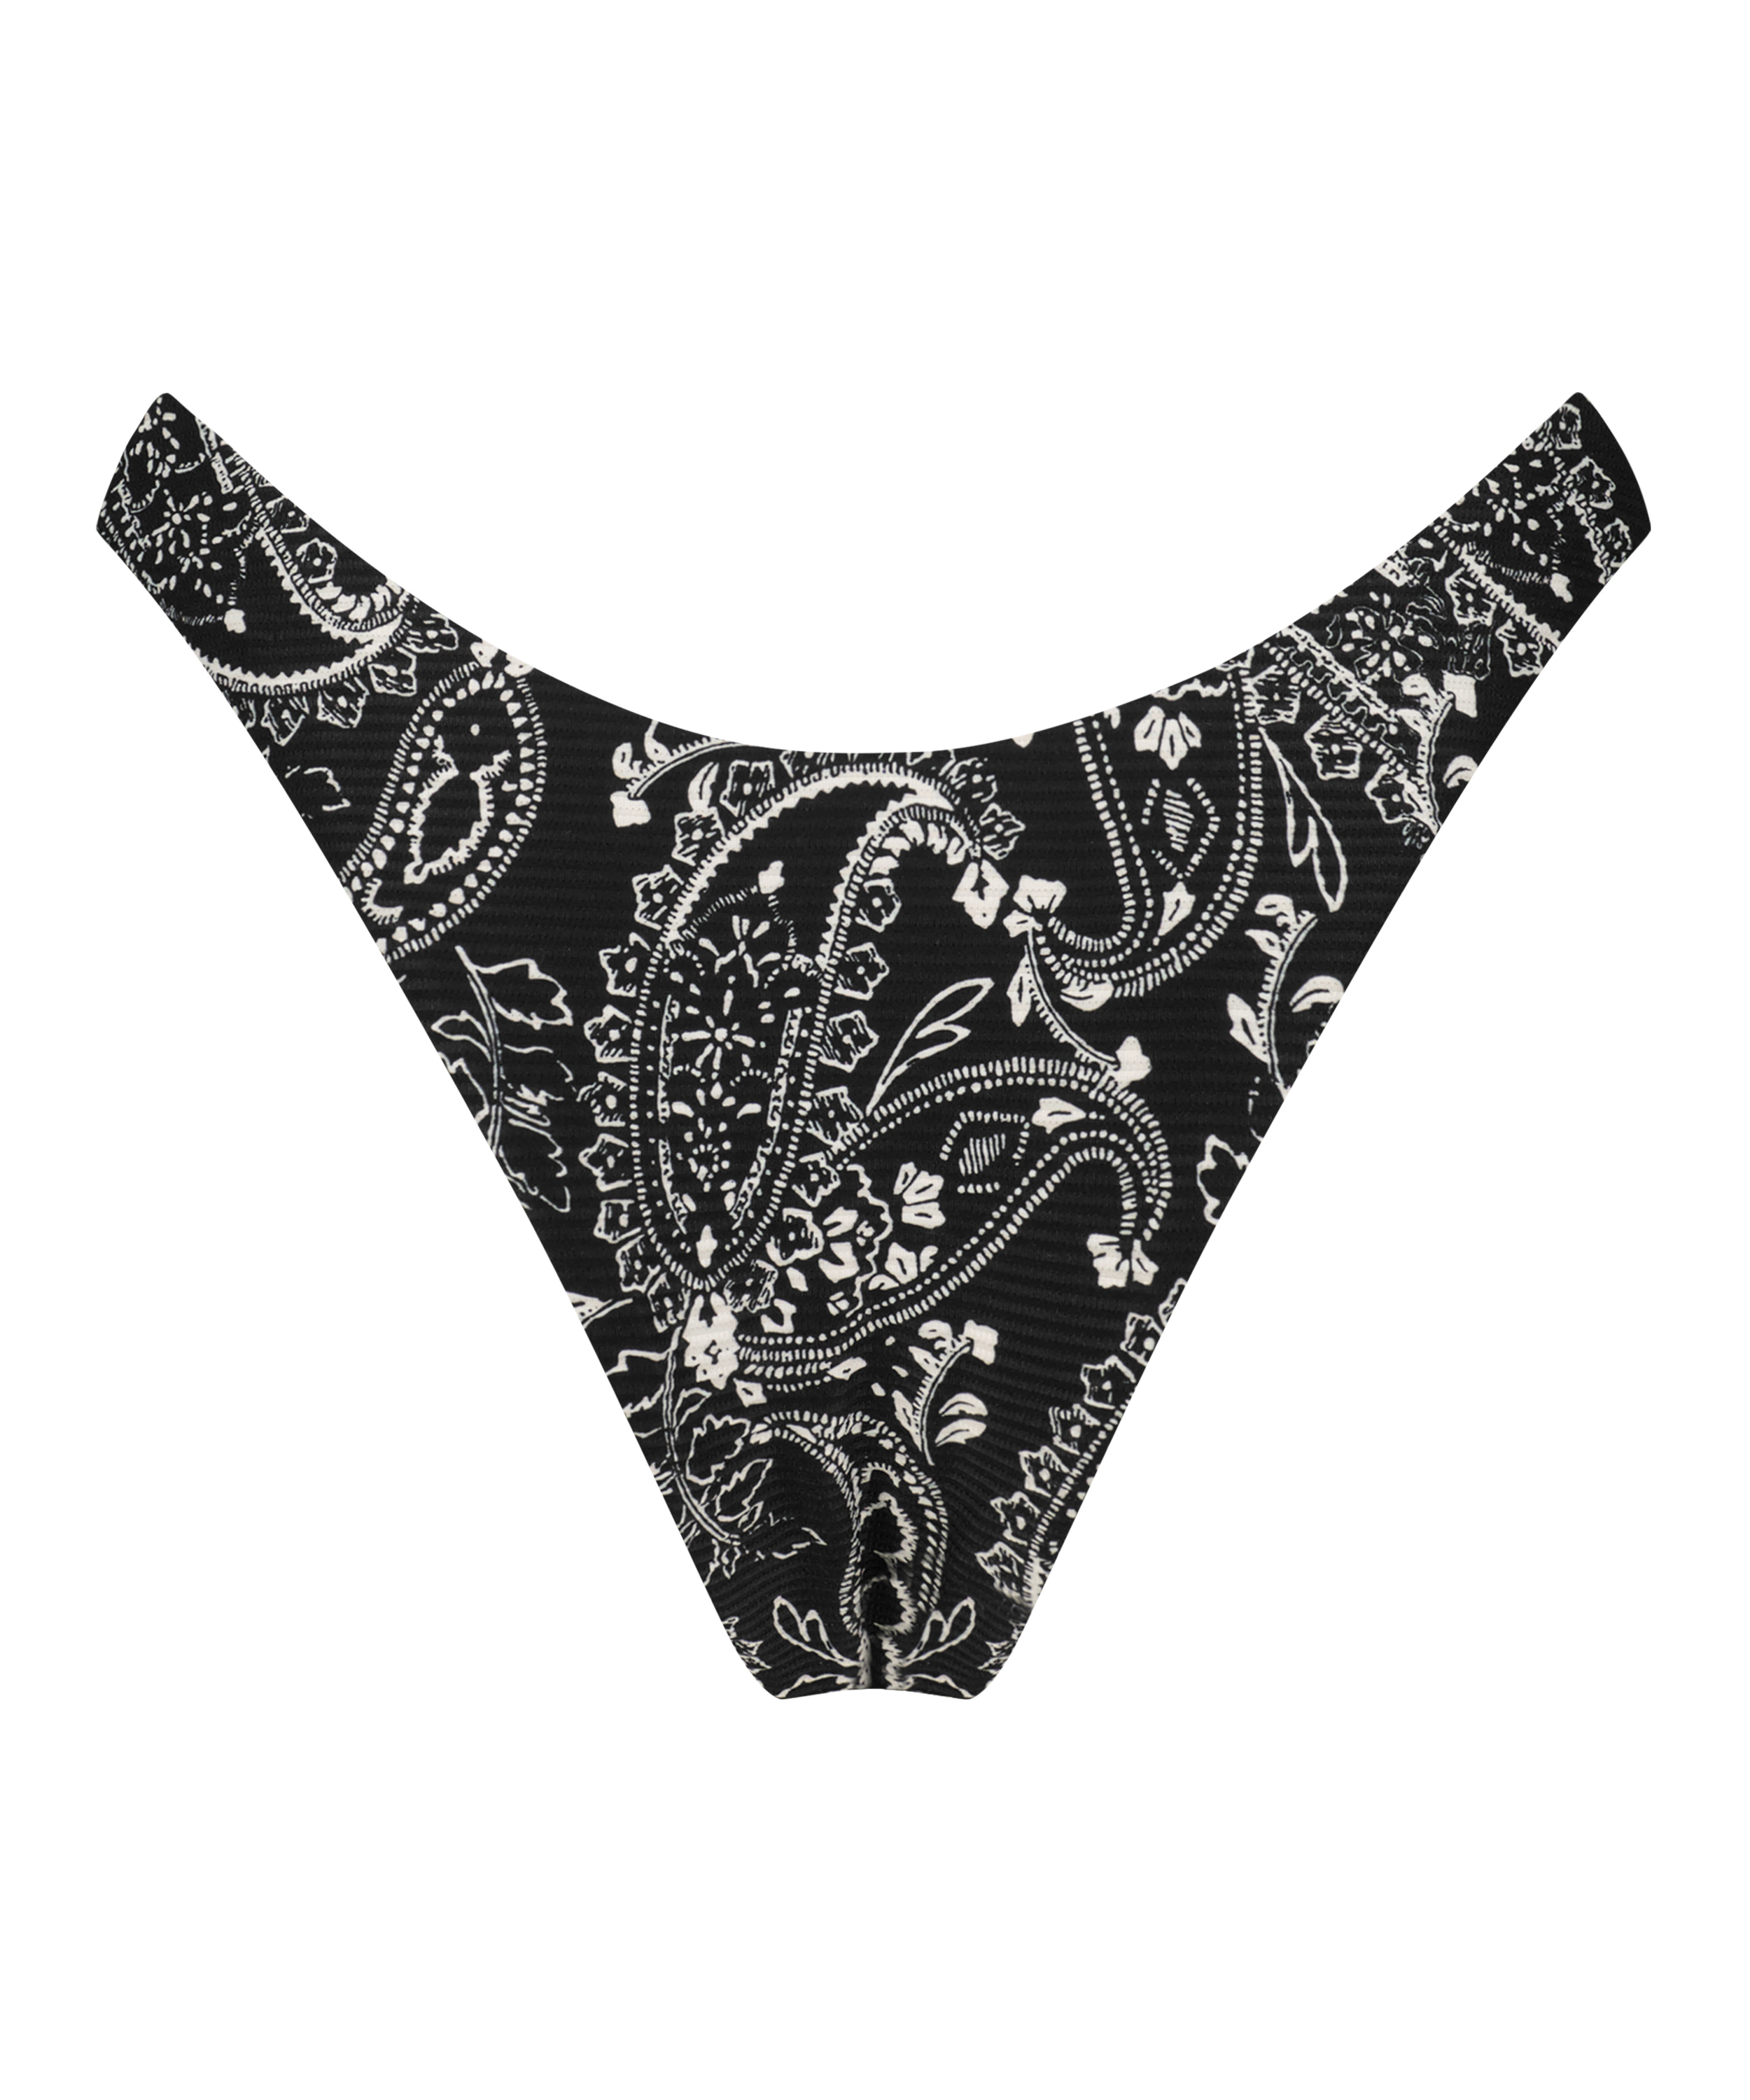 Paisley high-cut brazilian bikini bottoms, Black, main